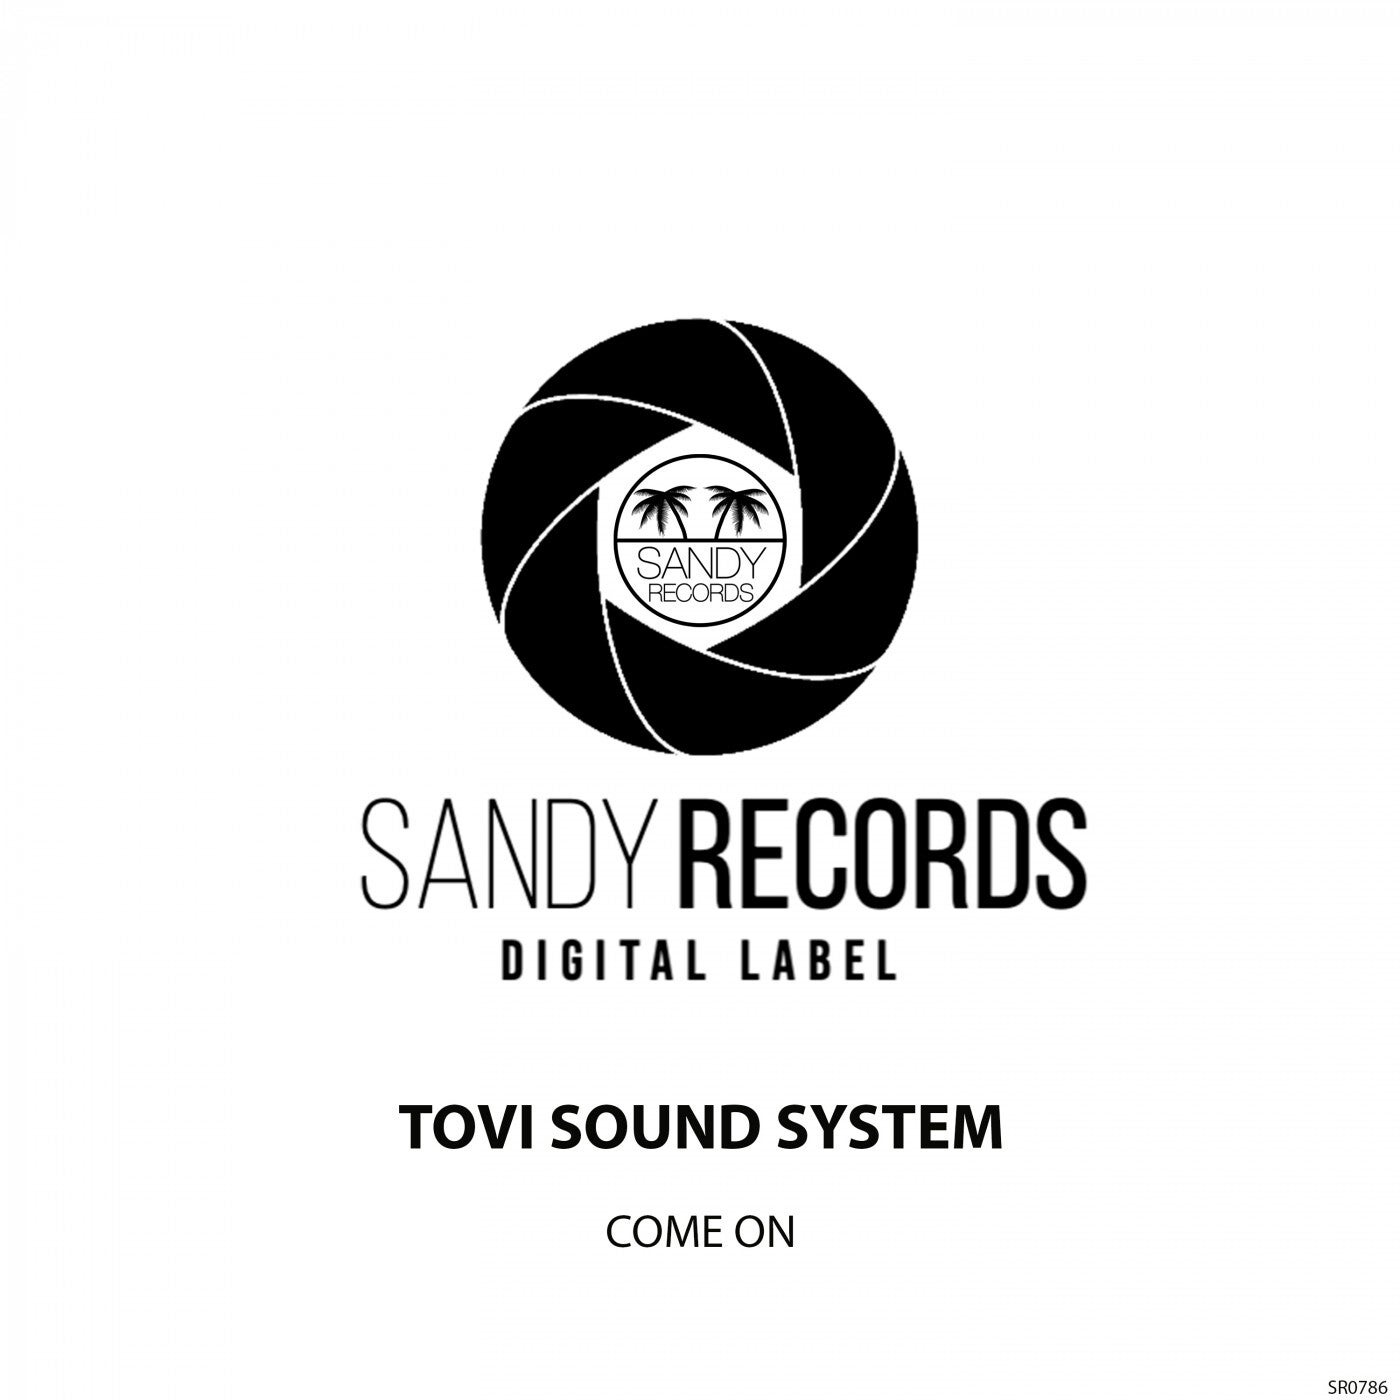 Tovi Sound System